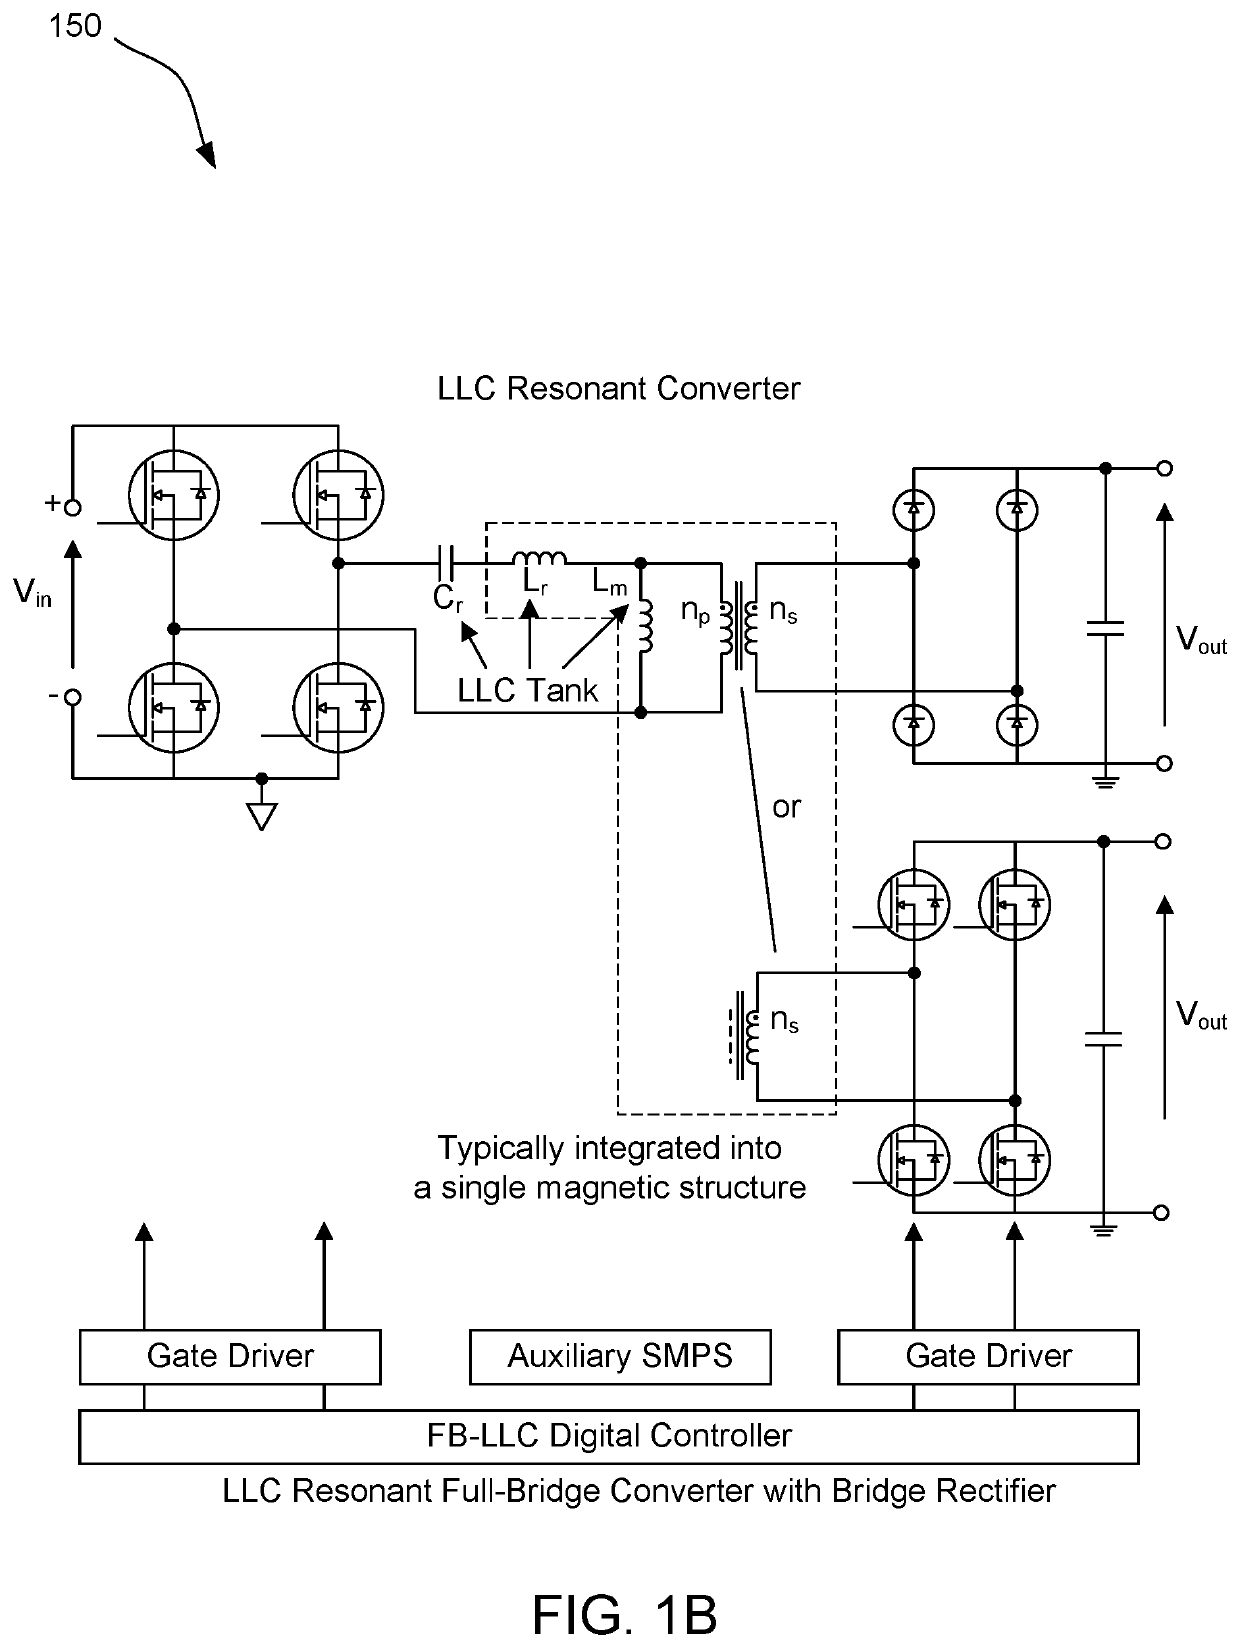 Reduced power consumption for llc resonant converter under light load